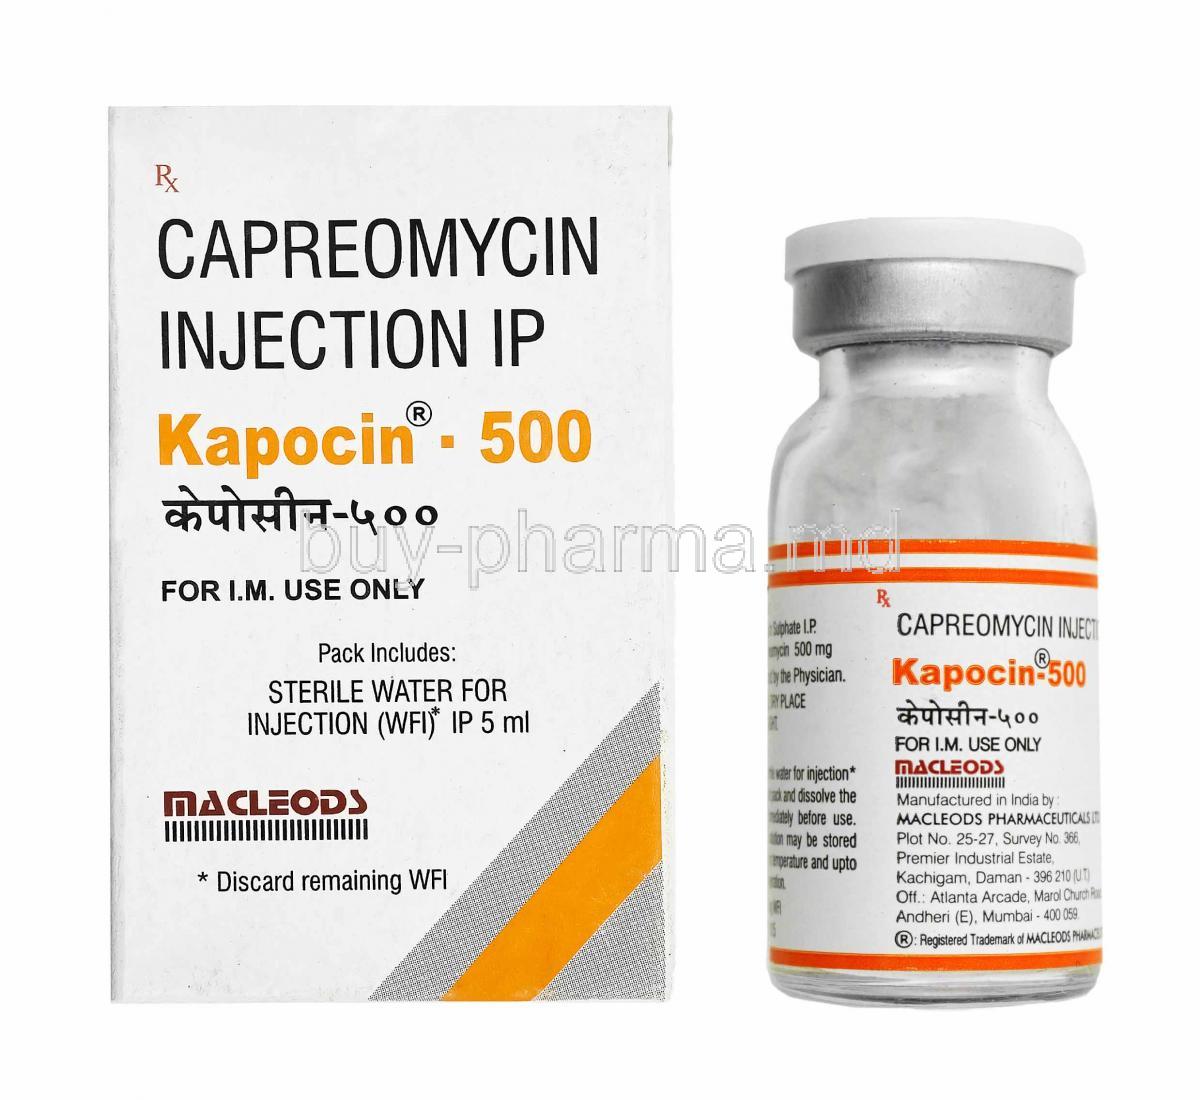 Kapocin Injuection, Capreomycin 500mg box and vial